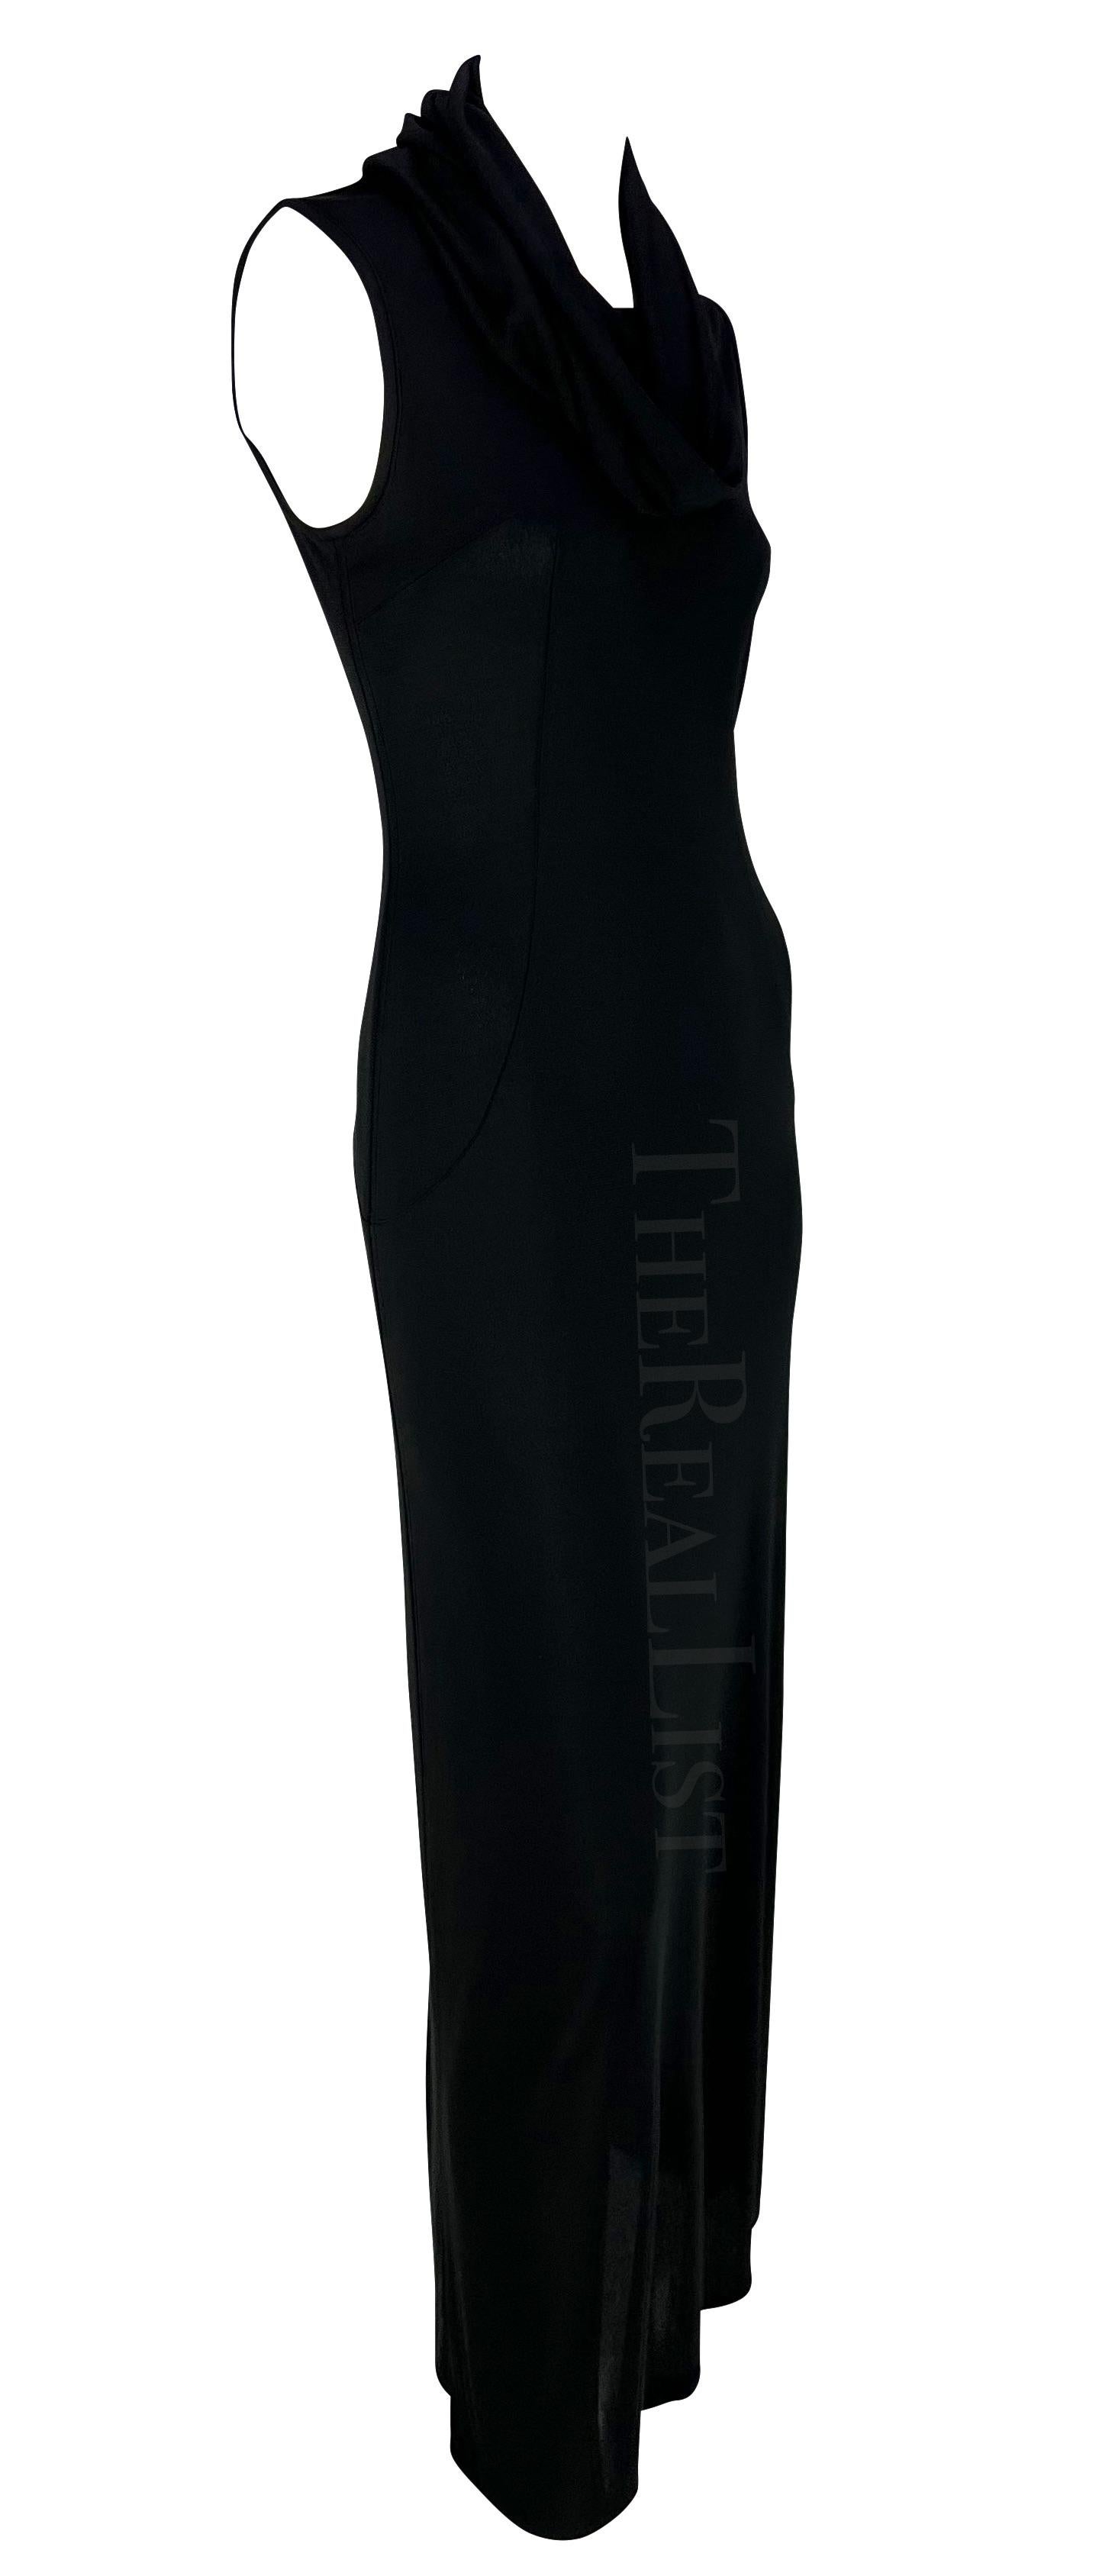 S/S 1996 Dolce & Gabbana Runway Hooded Stretch Black High Slit Dress For Sale 10